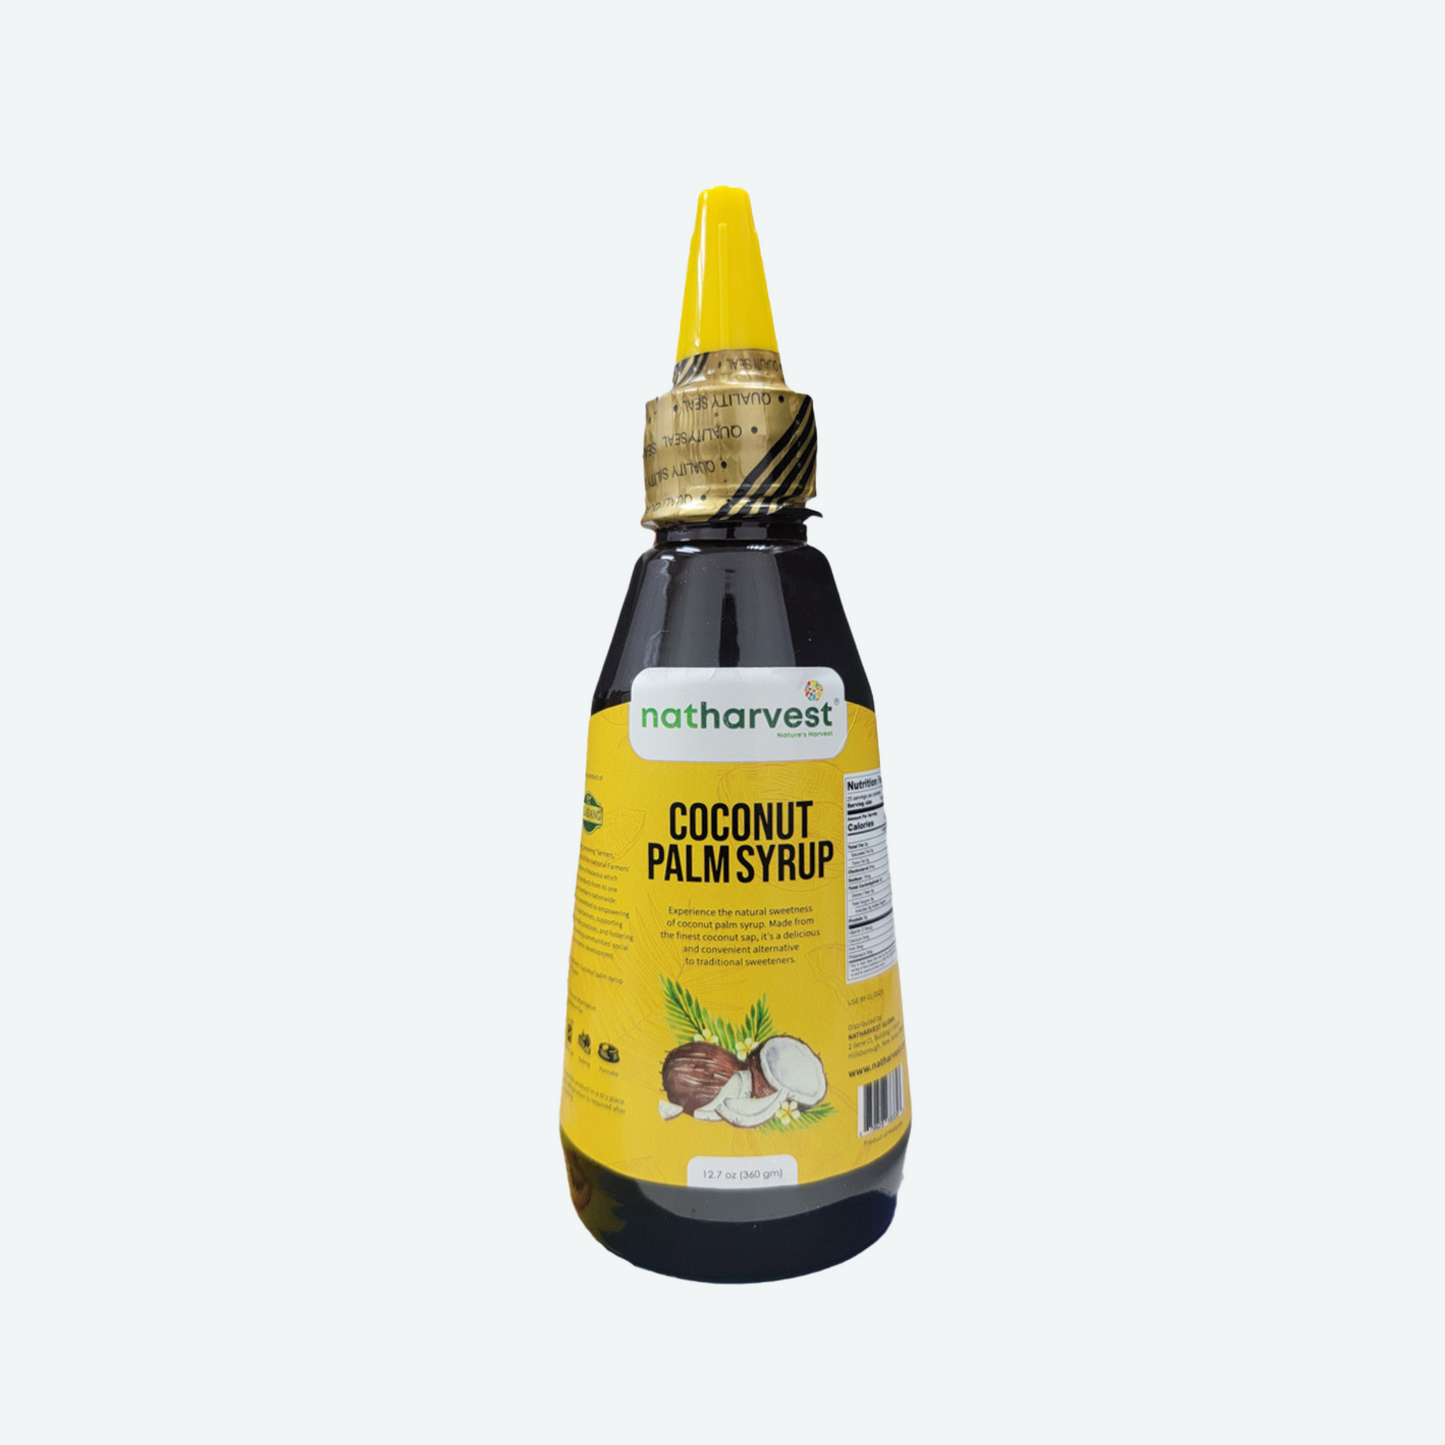 Natharvest Coconut Palm Syrup, 12.6 oz (360 gm)